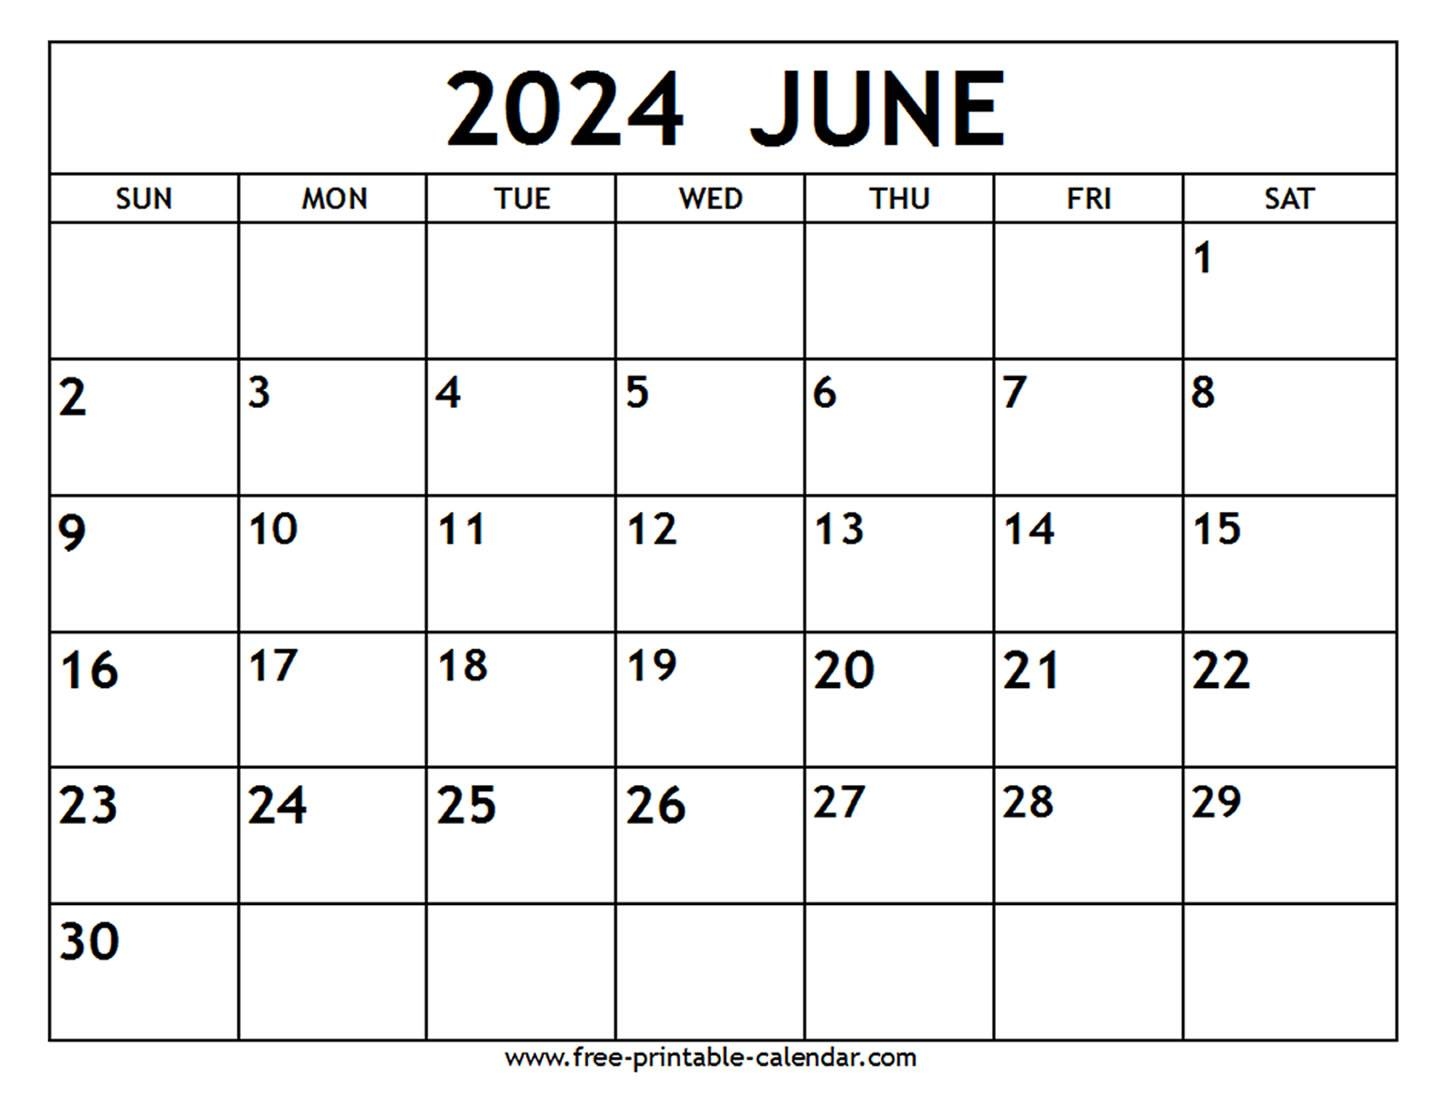 June 2024 Calendar - Free-Printable-Calendar throughout Free Printable Calend June 2024